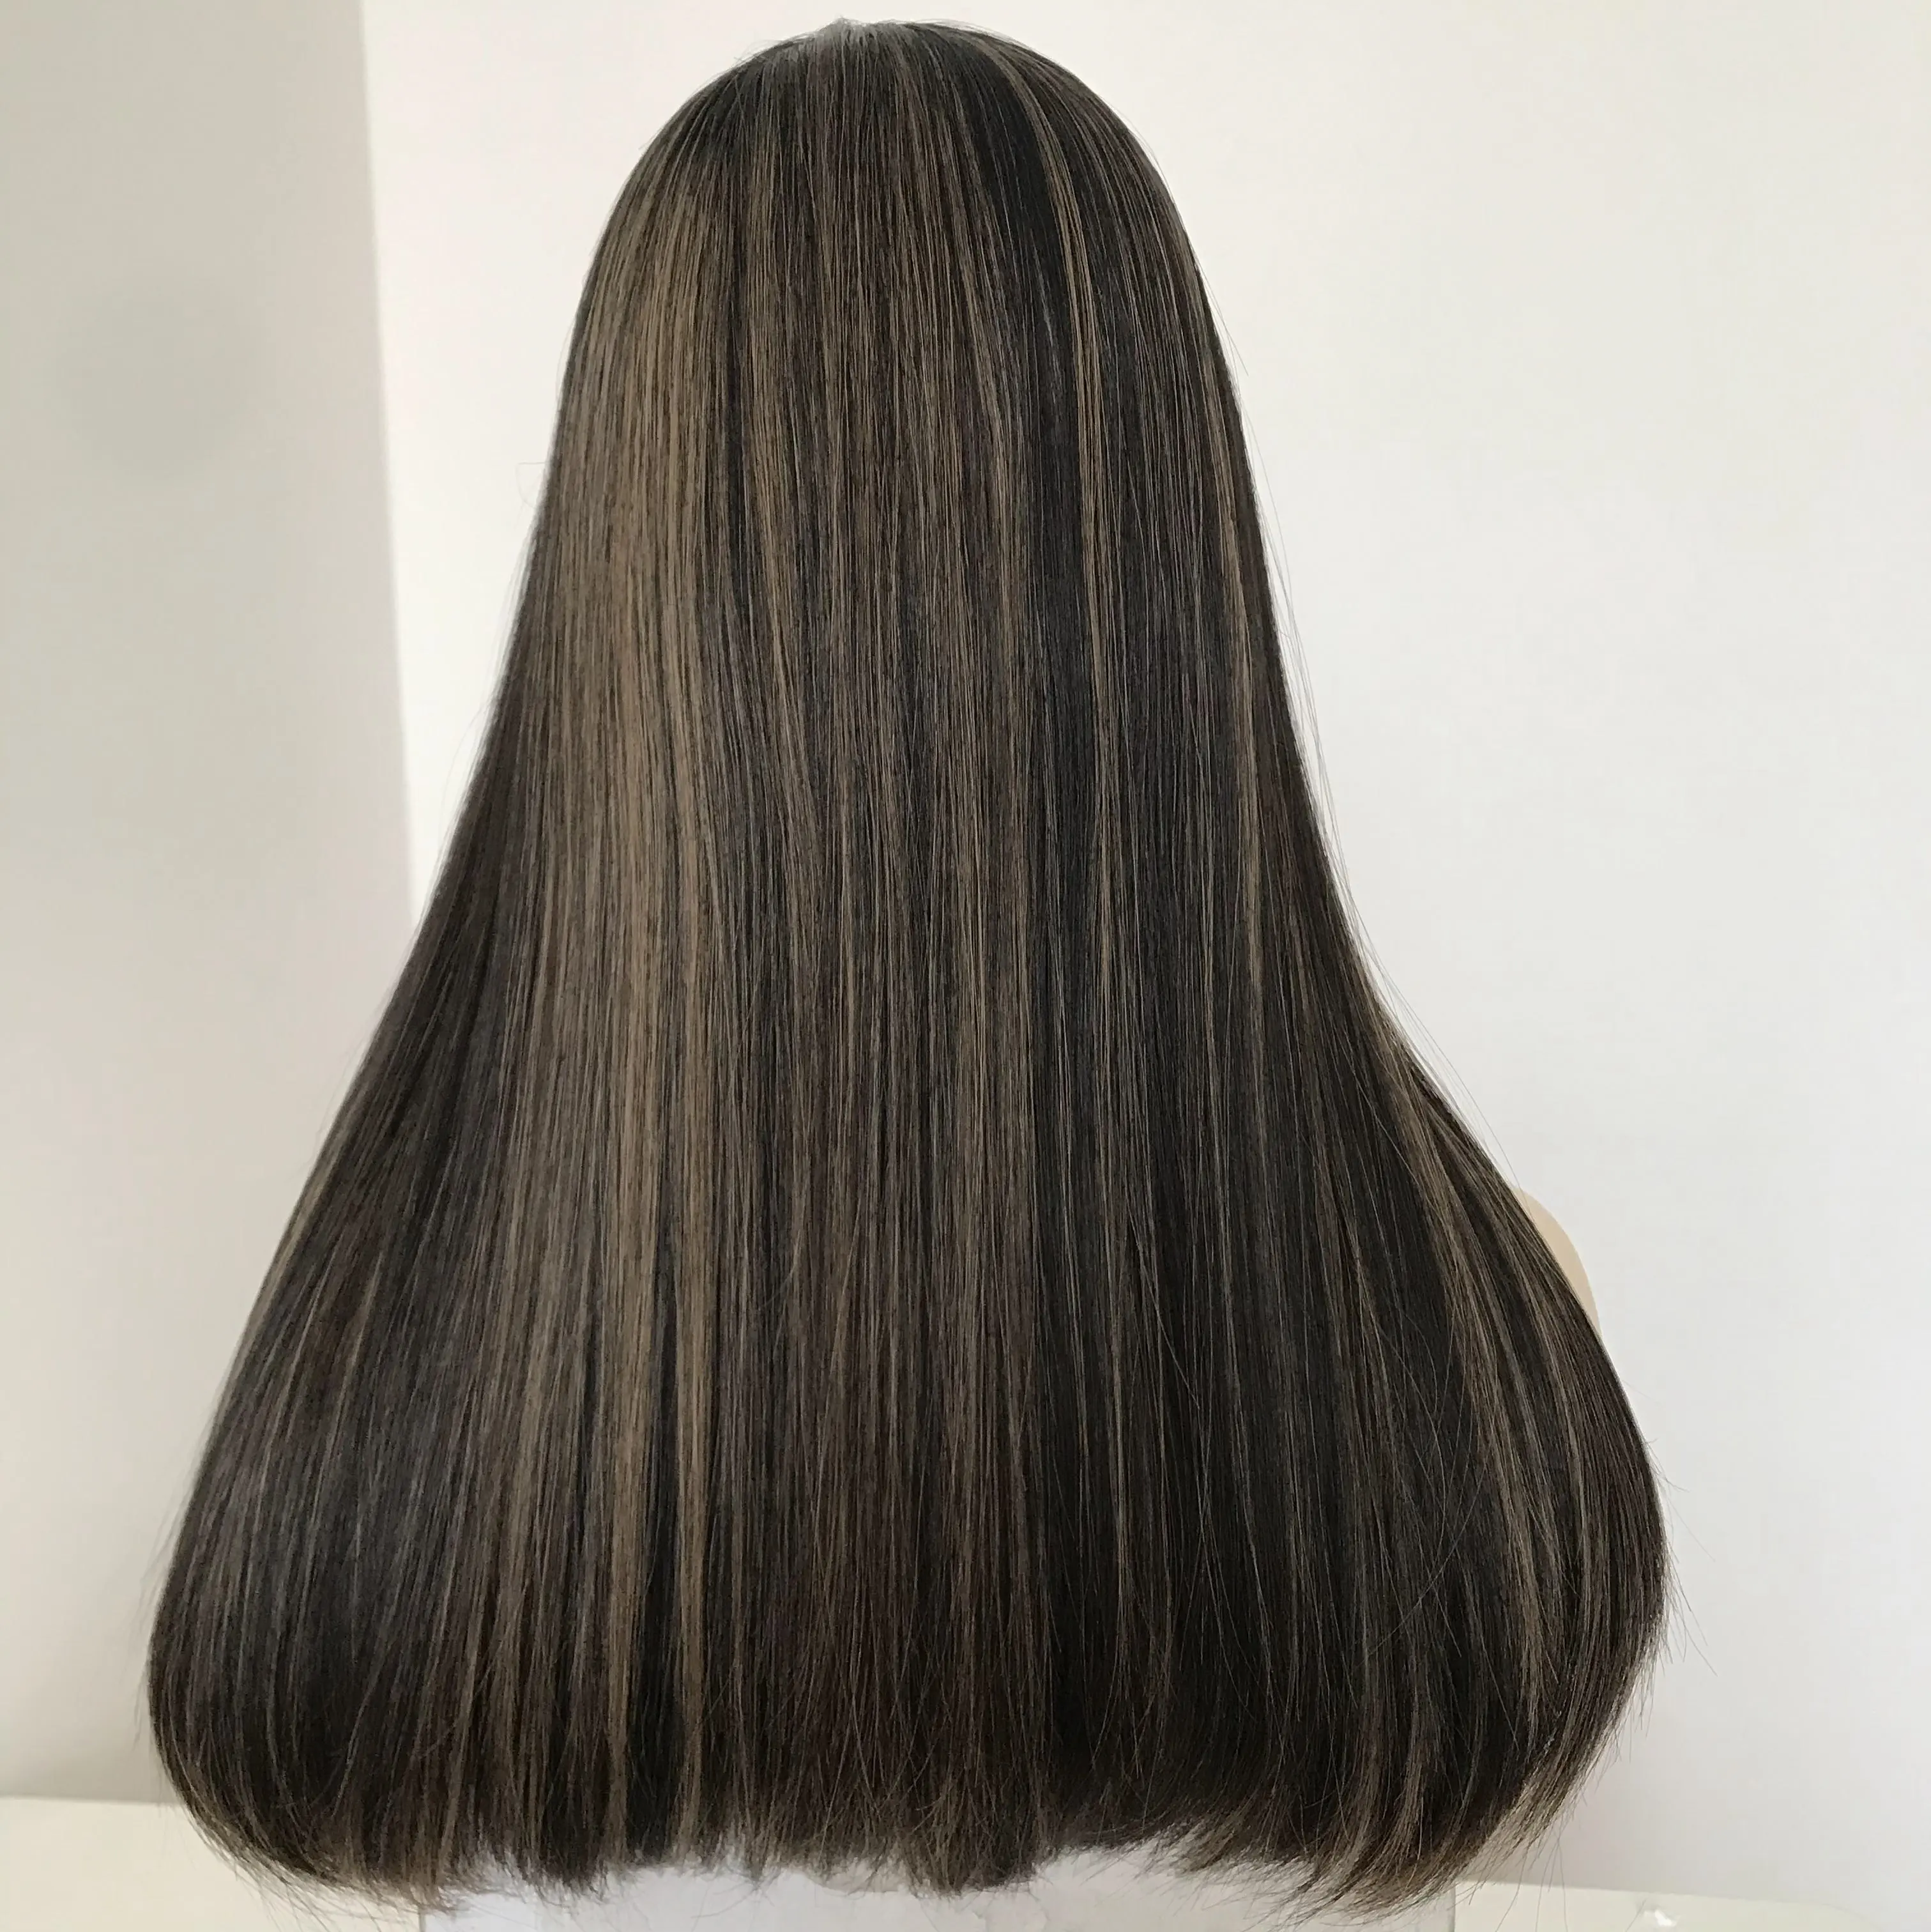 LX03 China Supplier New Dropping Virgin European Shiny Unprocessed Human Hair Kosher Jewish Wig